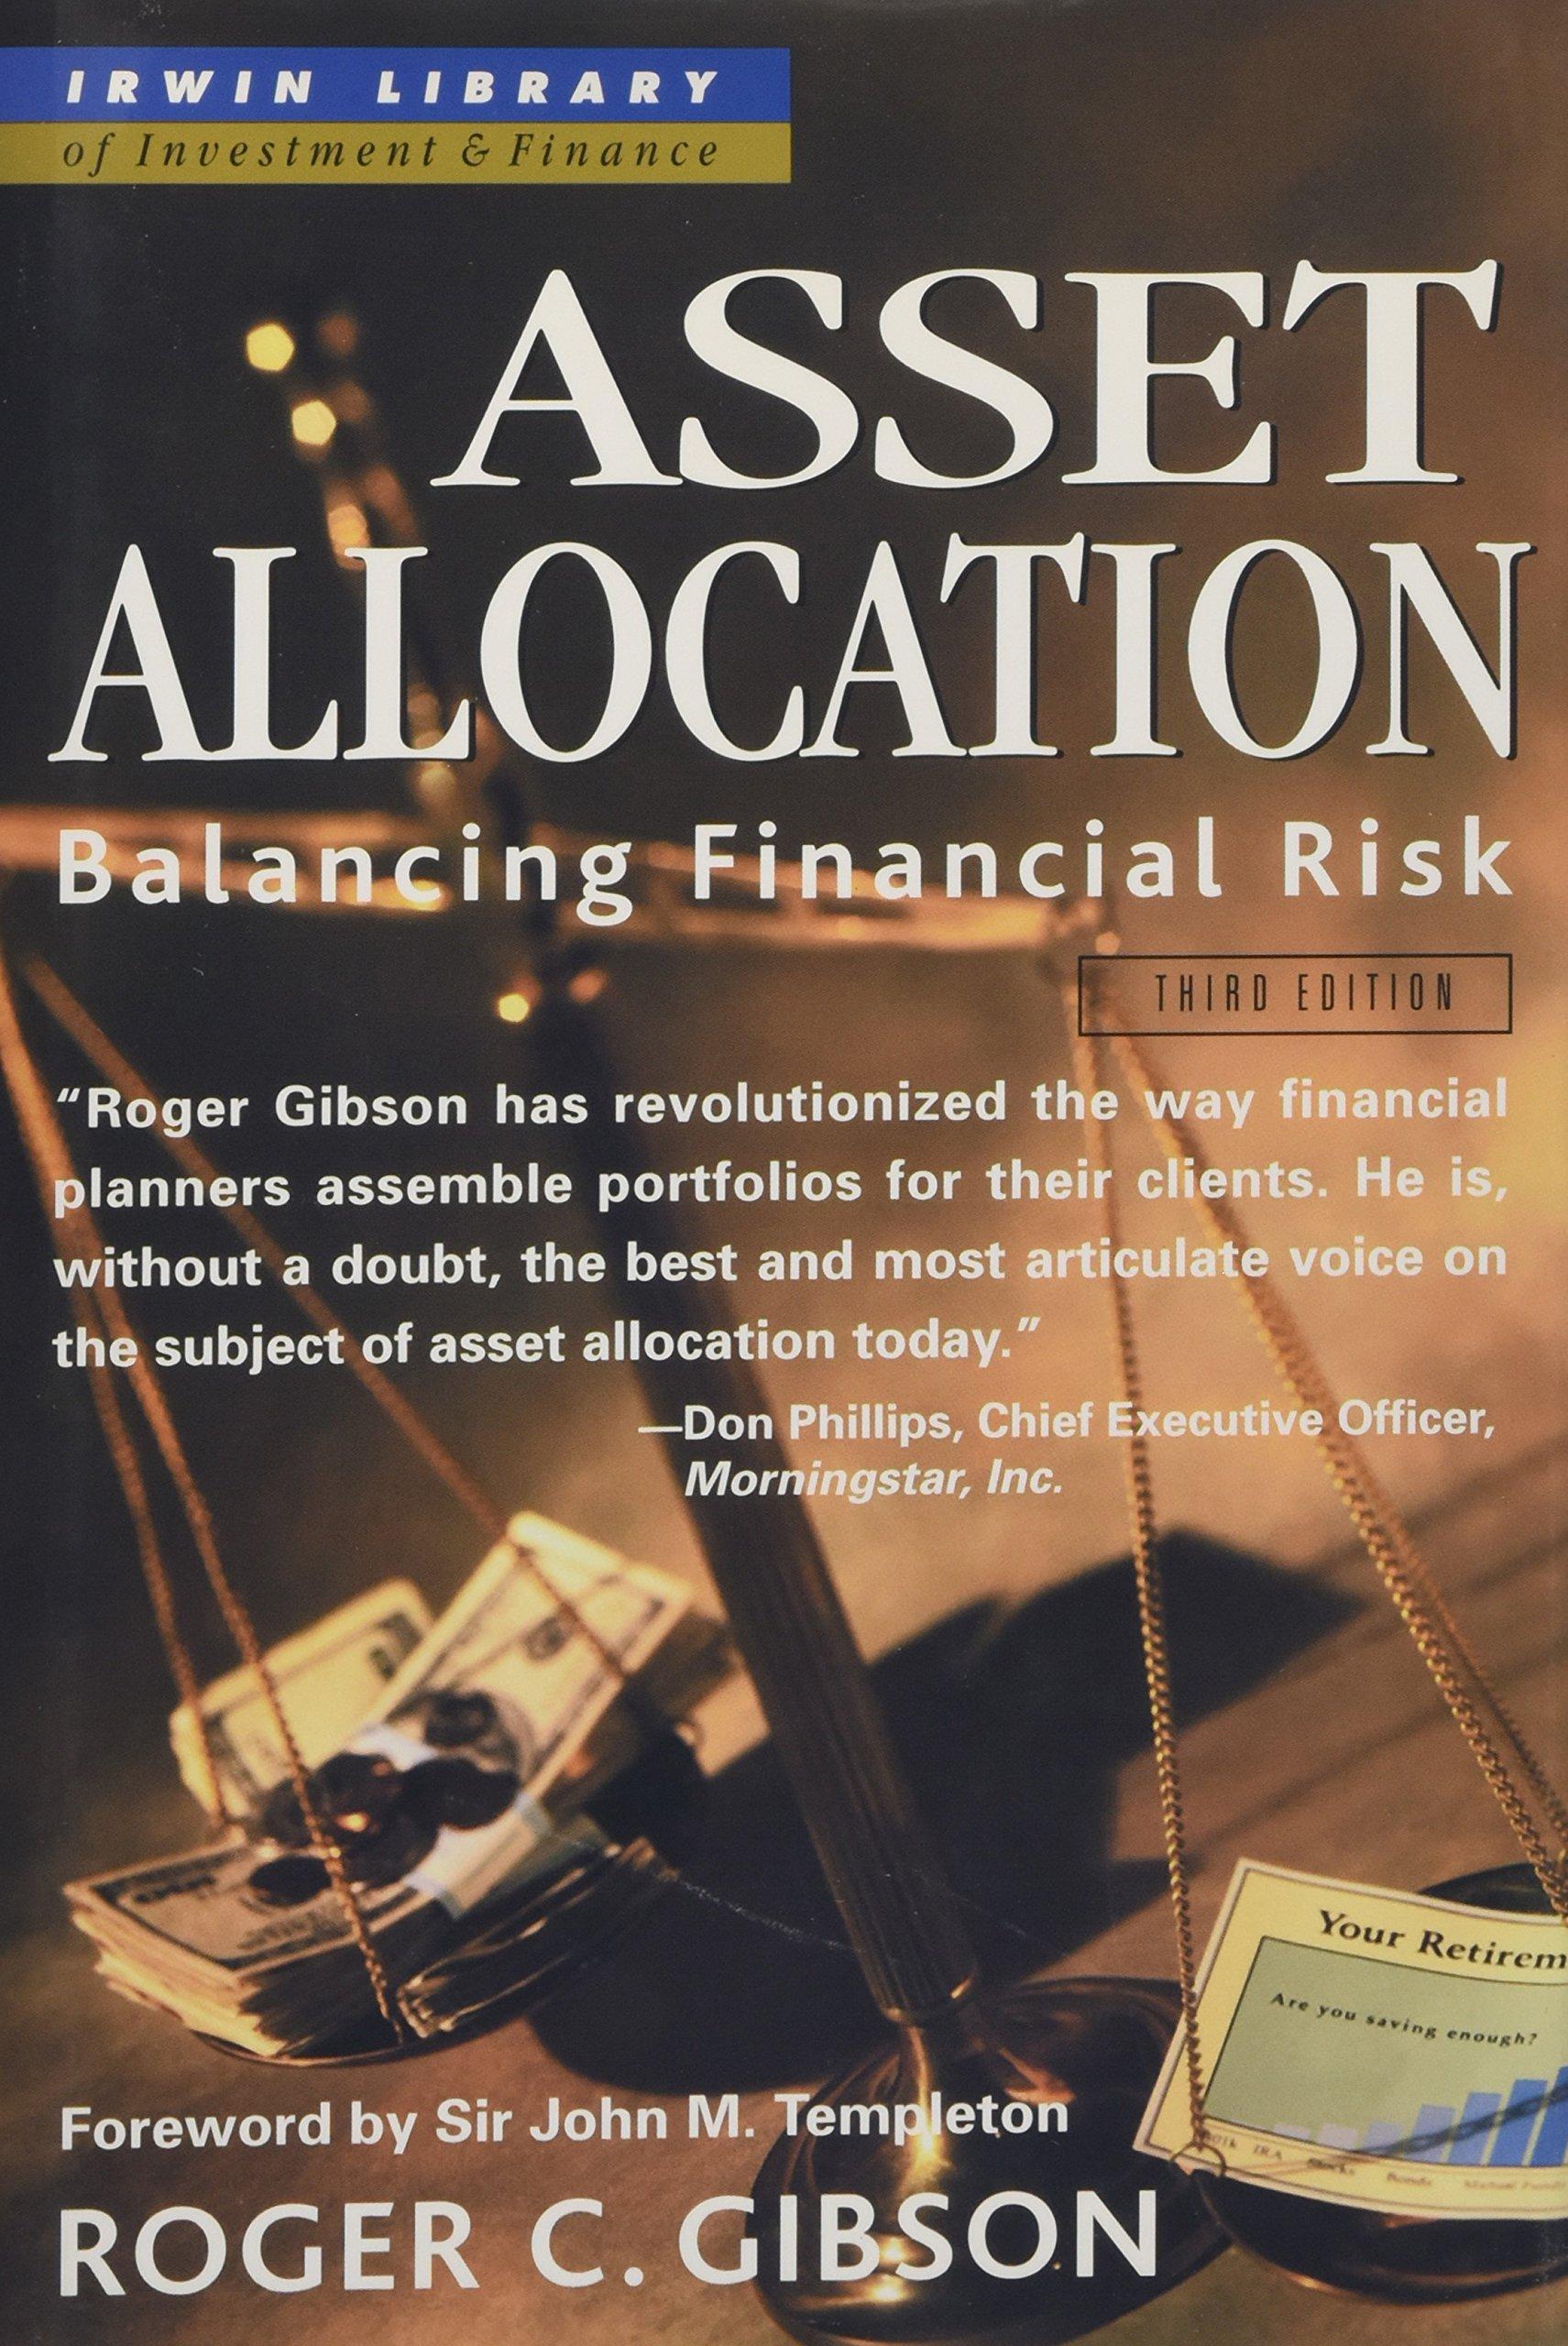 asset allocation balancing financial risk 3rd edition roger c. gibson, john m. templeton 0071357246,